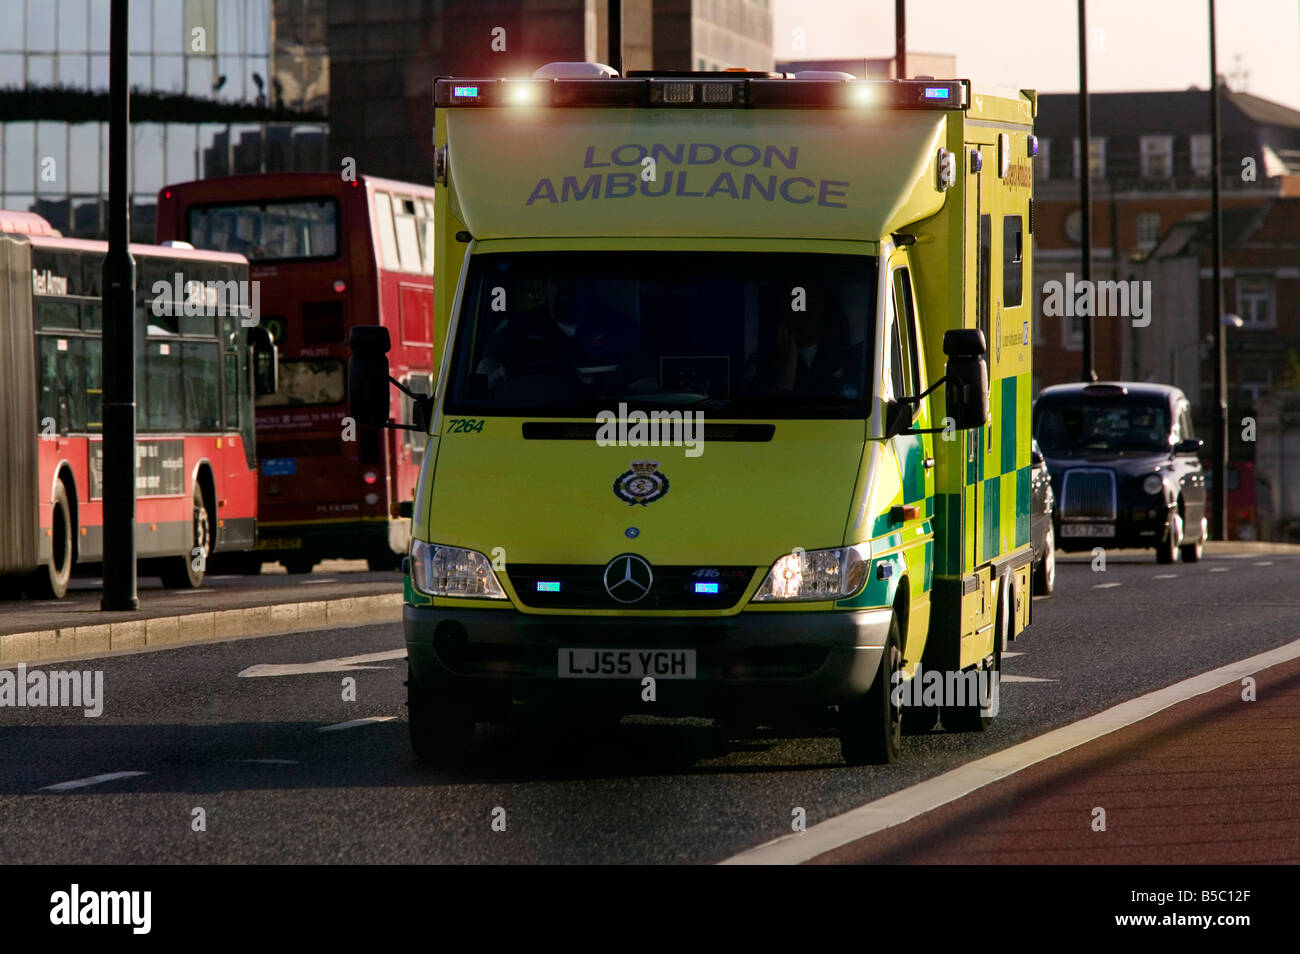 London Ambulance on emergency call Stock Photo